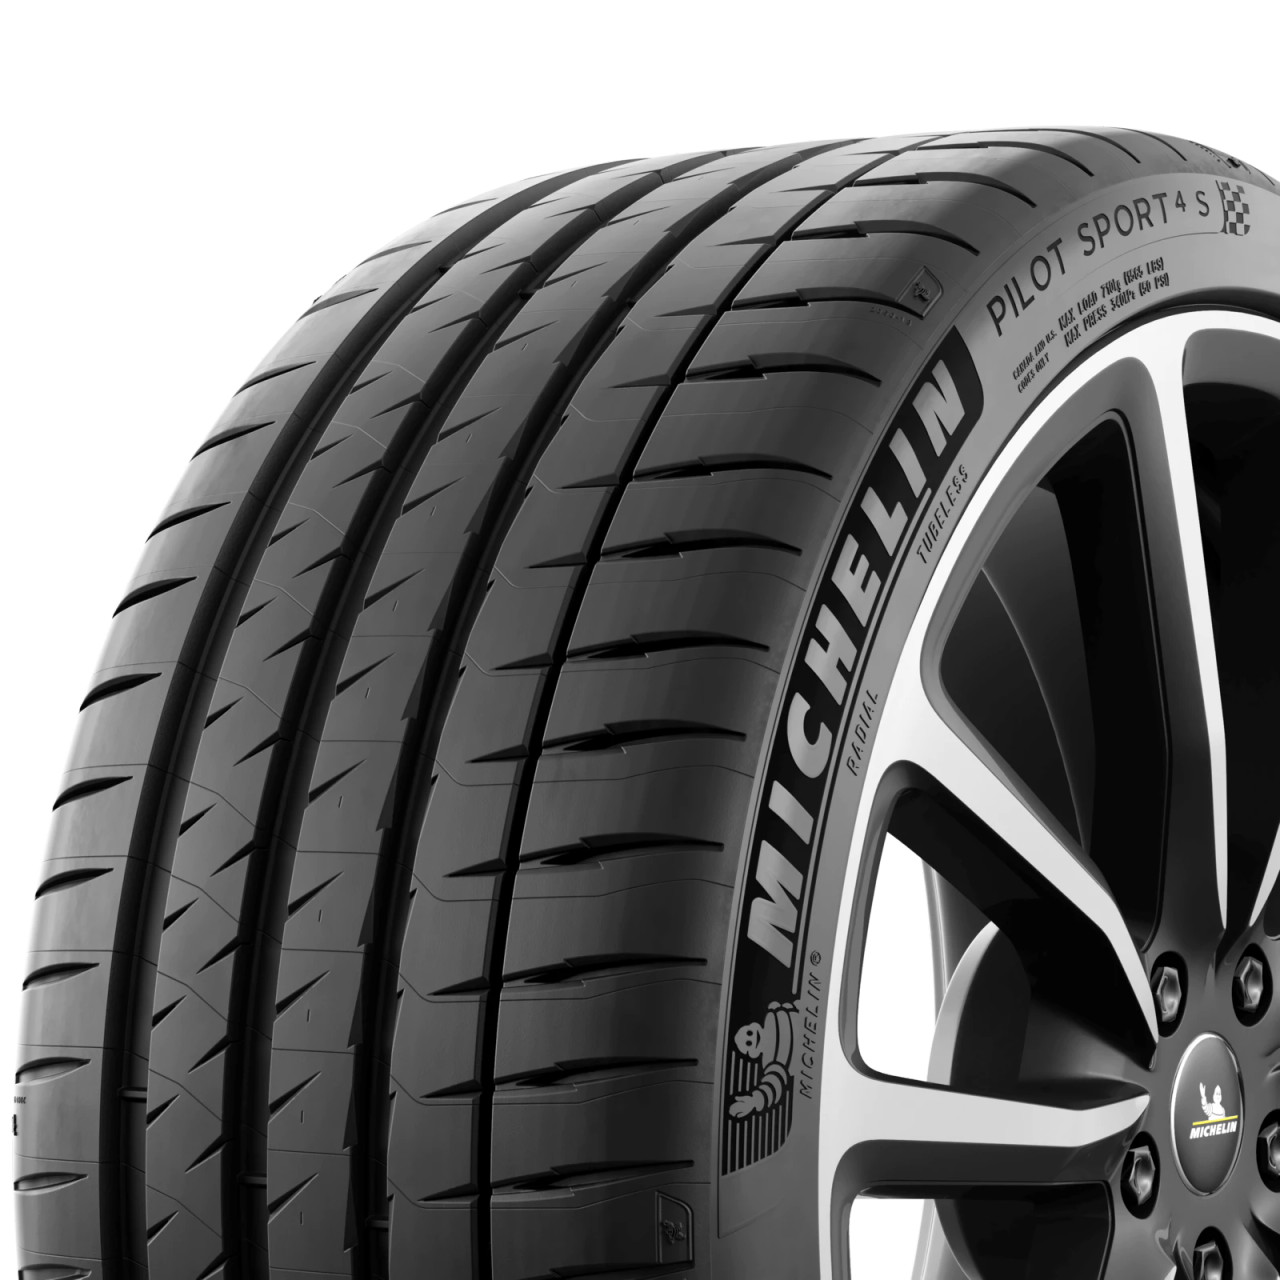 Michelin Pilot Sport 4S 275/30ZR19 (96Y) XL Tire